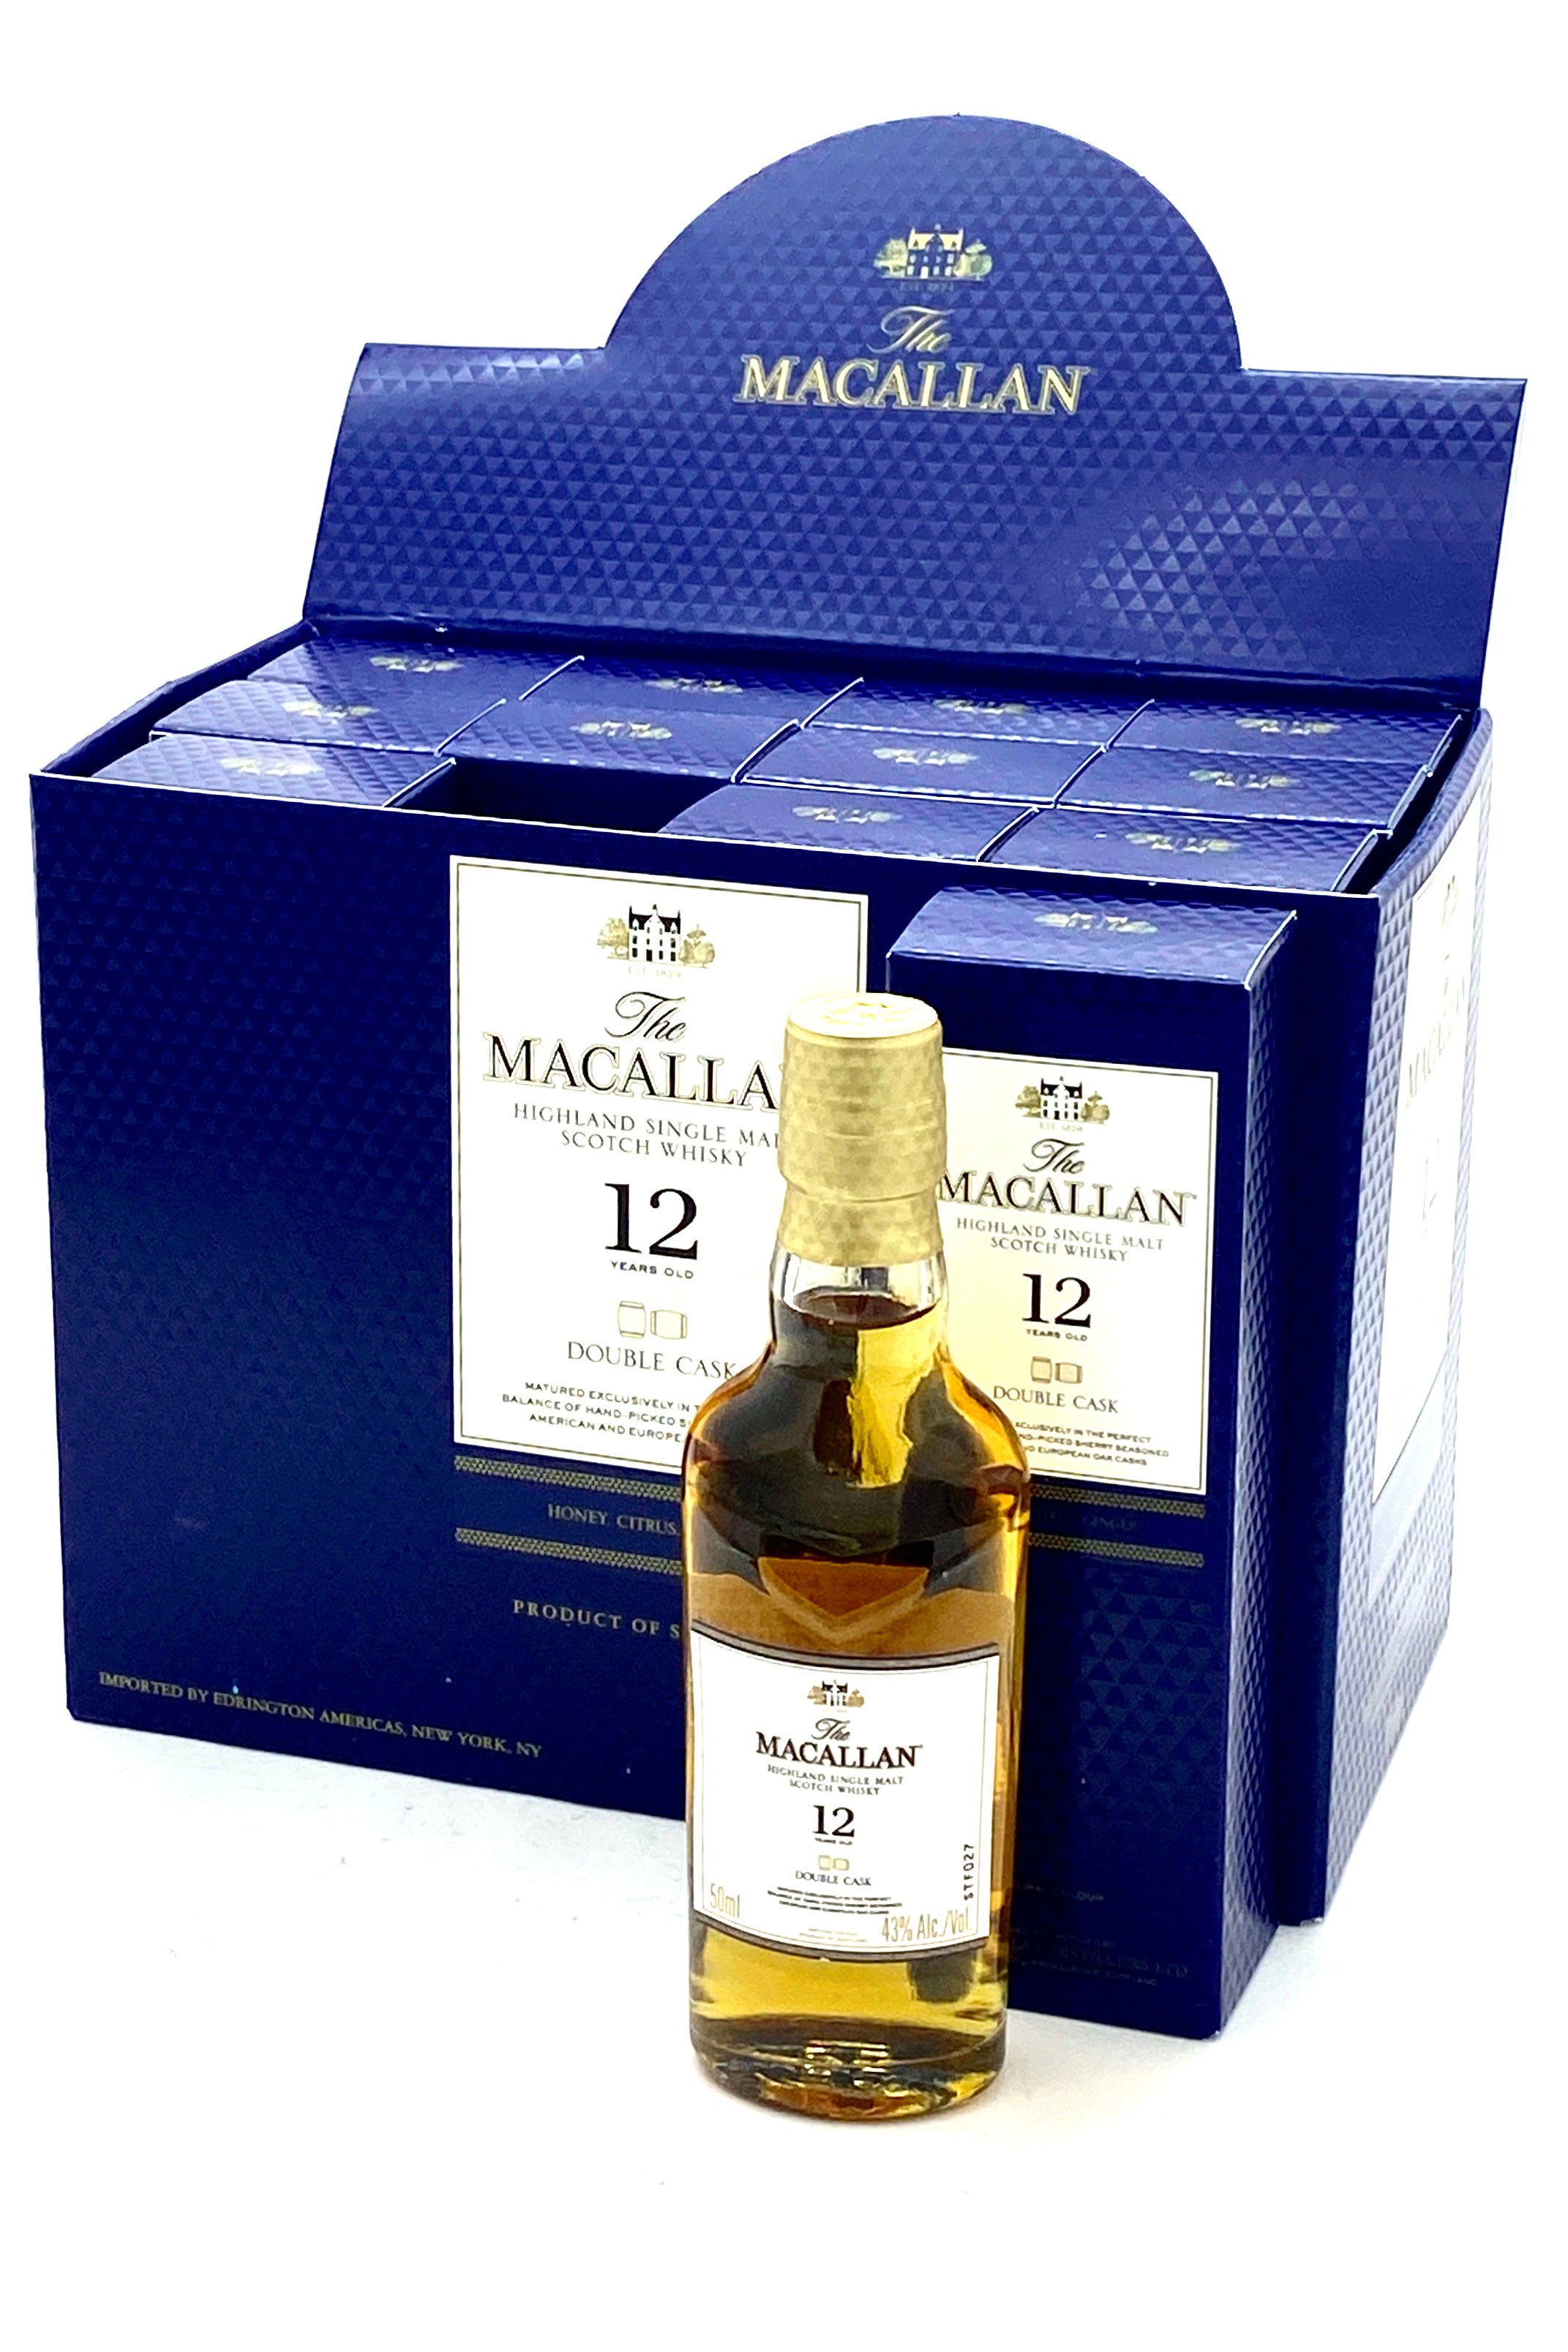 BUY] Macallan 50 Year Old Single Malt Scotch Whisky at